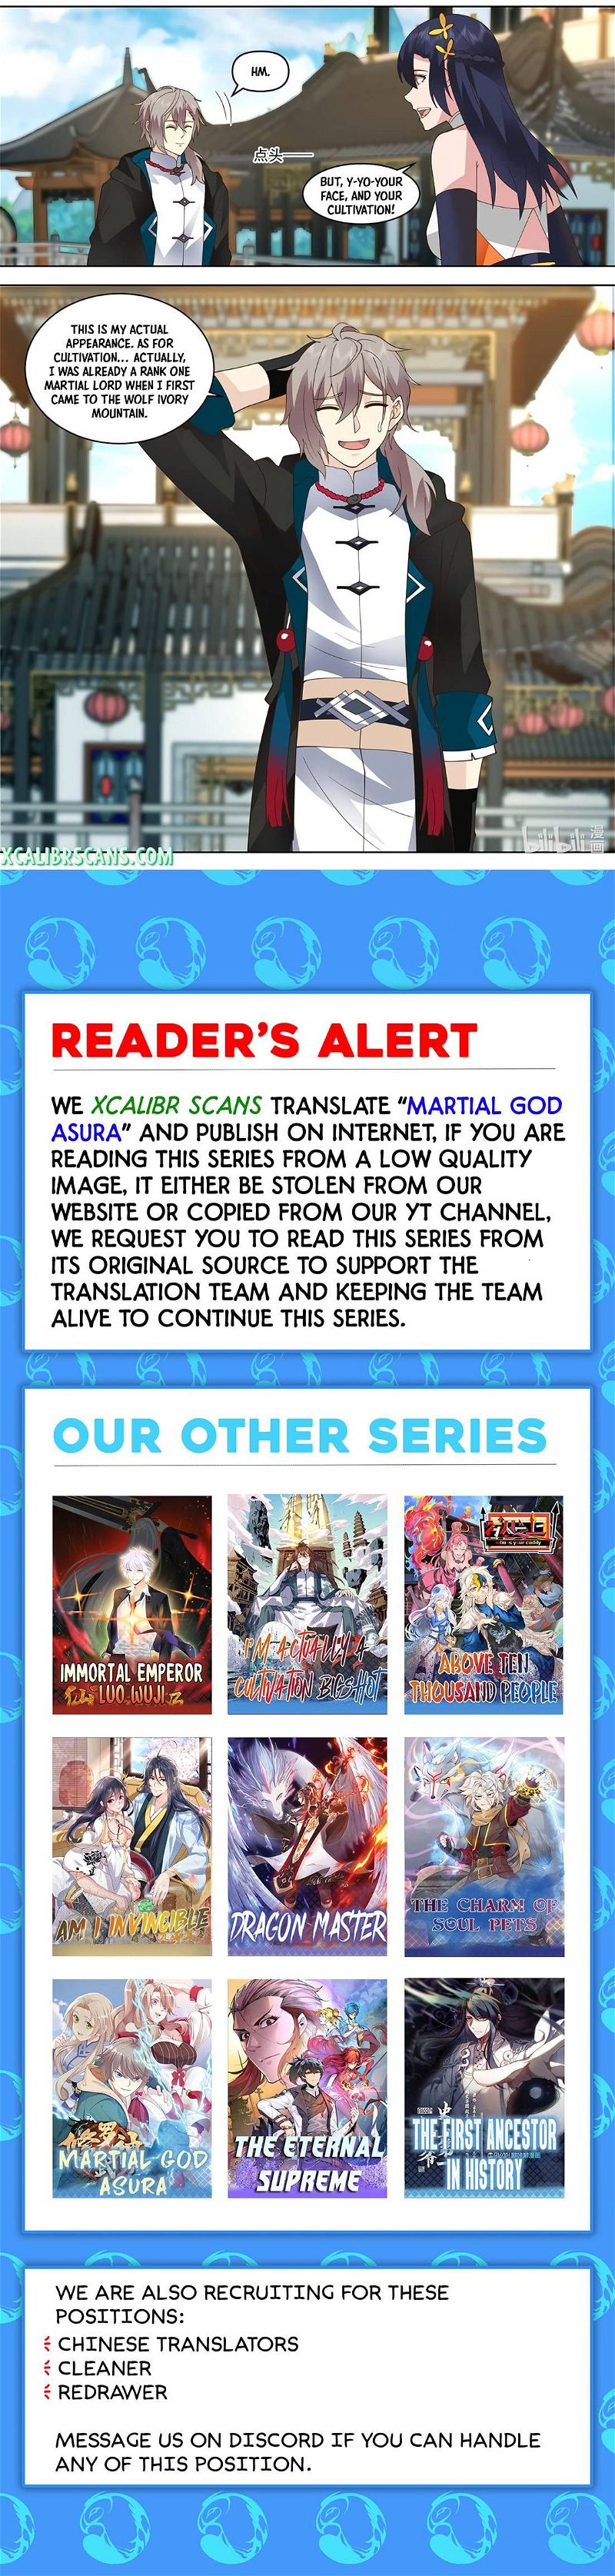 Martial God Asura Chapter 487 page 10